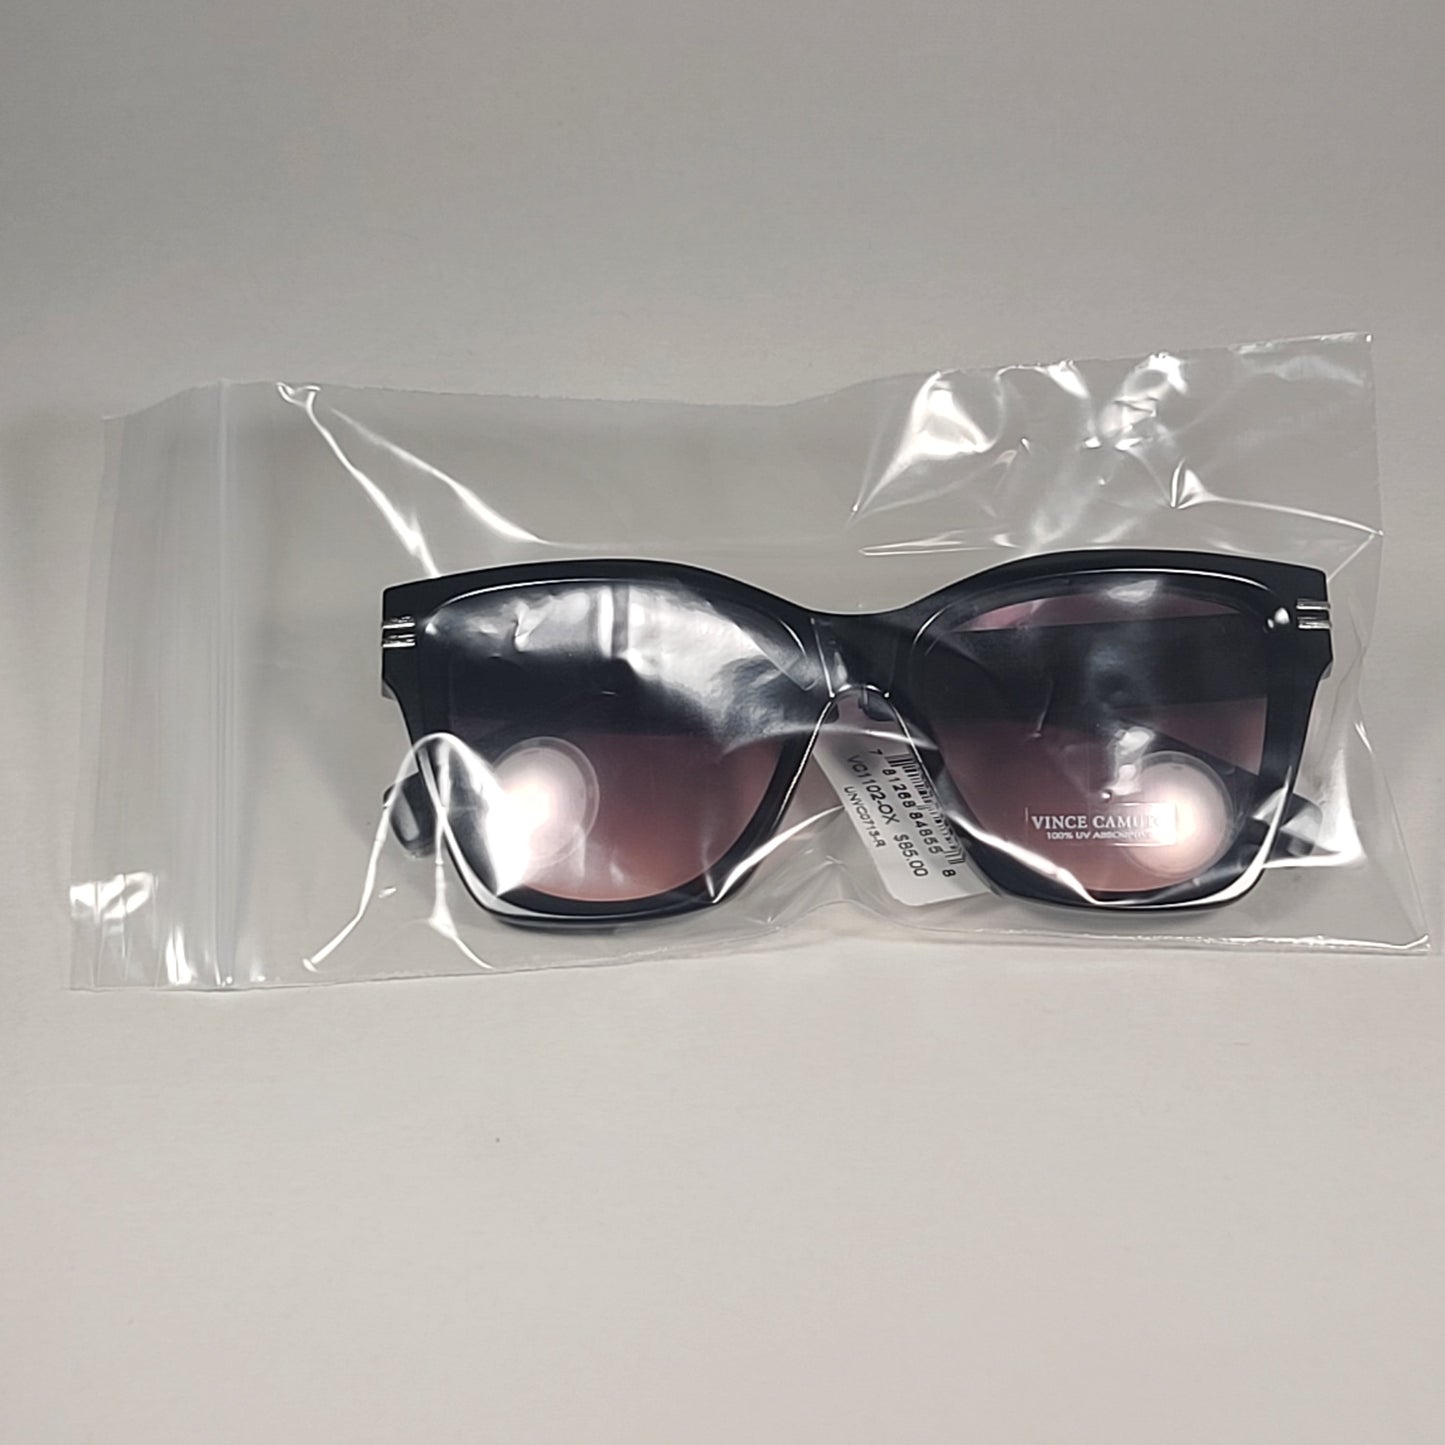 Vince Camuto Women’s VC1102 OX Designer Sunglasses Black Frame Gradient Lens - Sunglasses